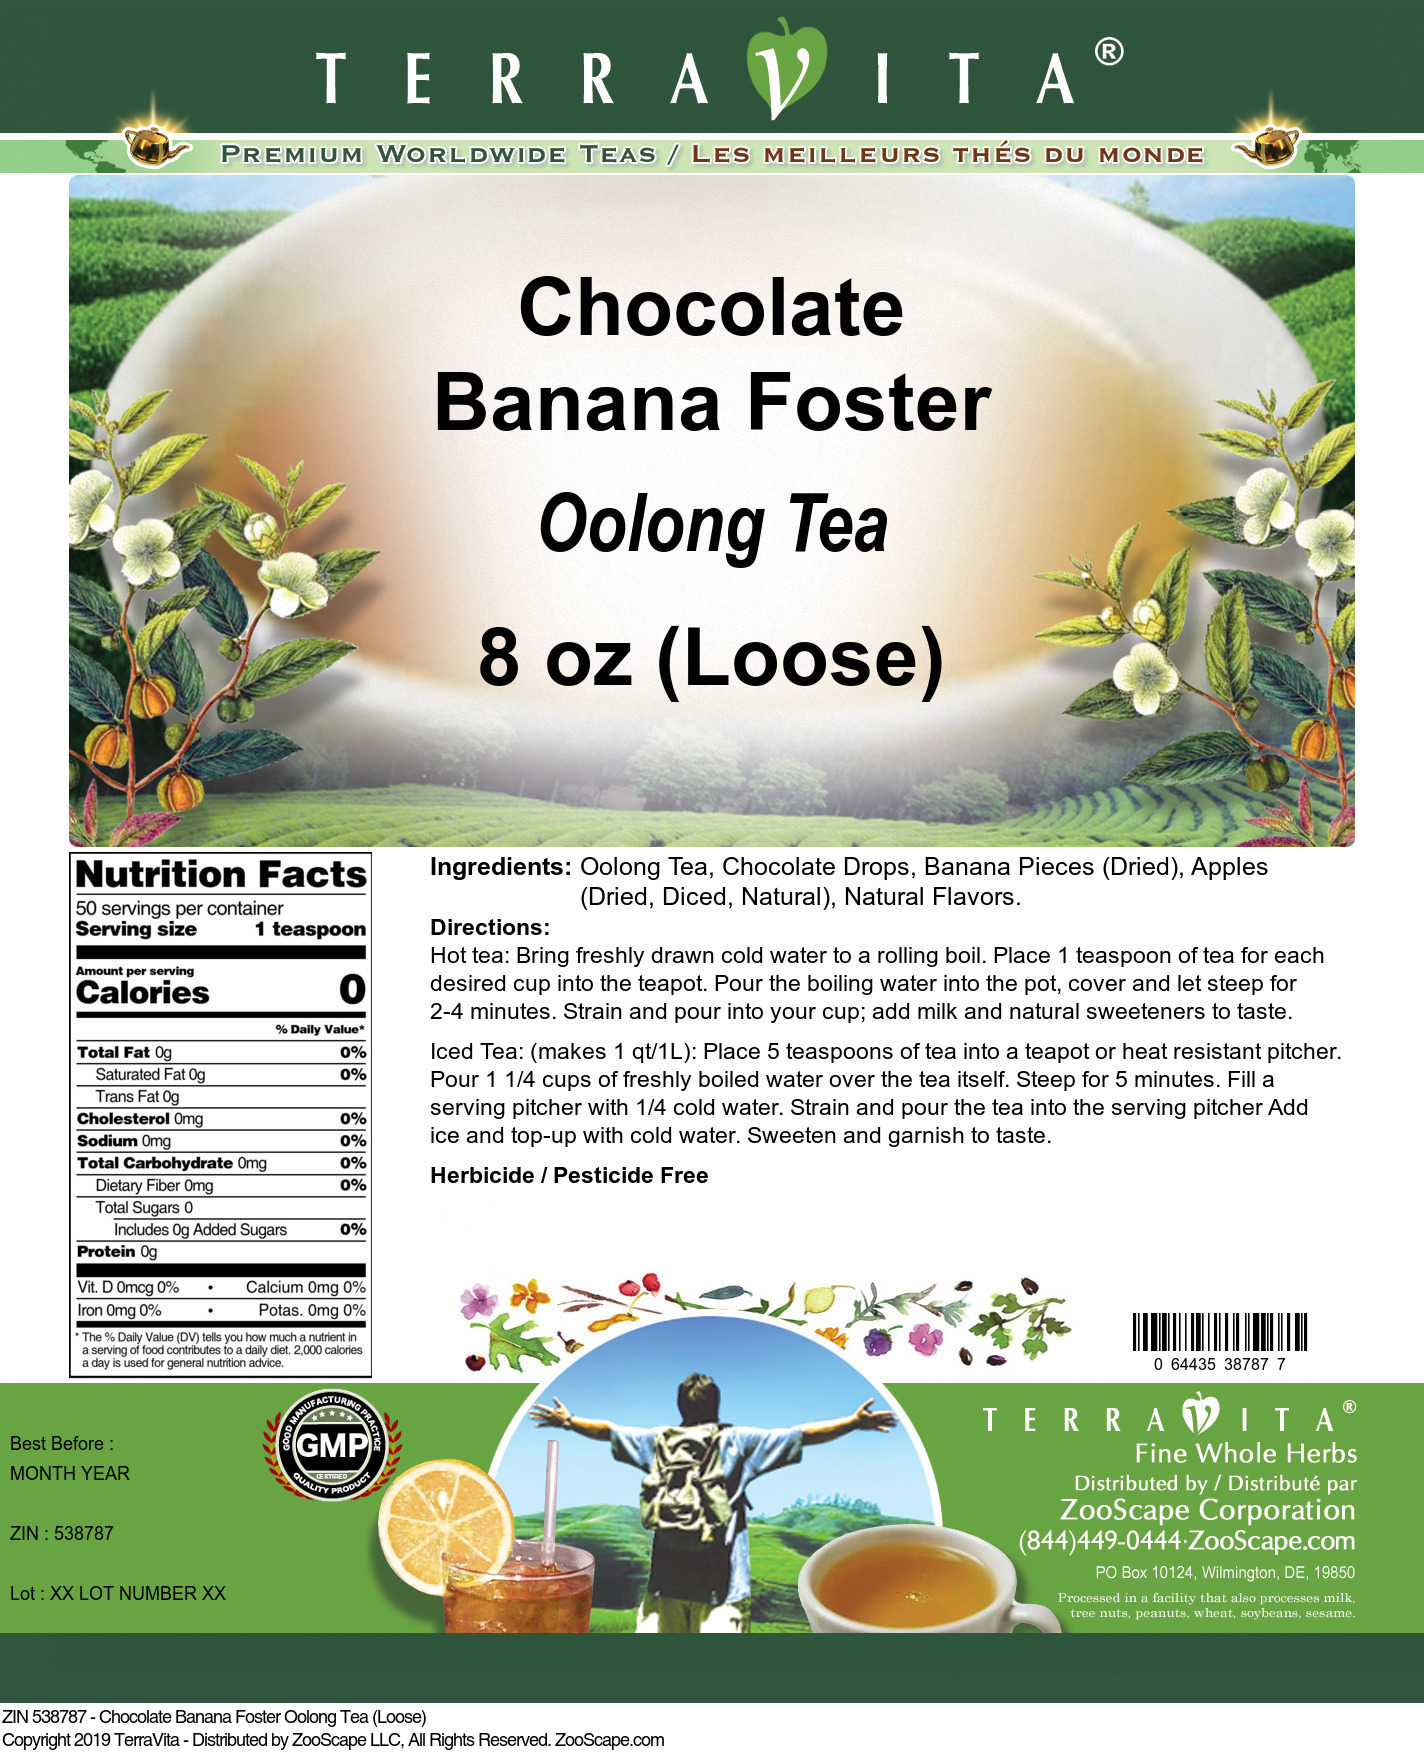 Chocolate Banana Foster Oolong Tea (Loose) - Label